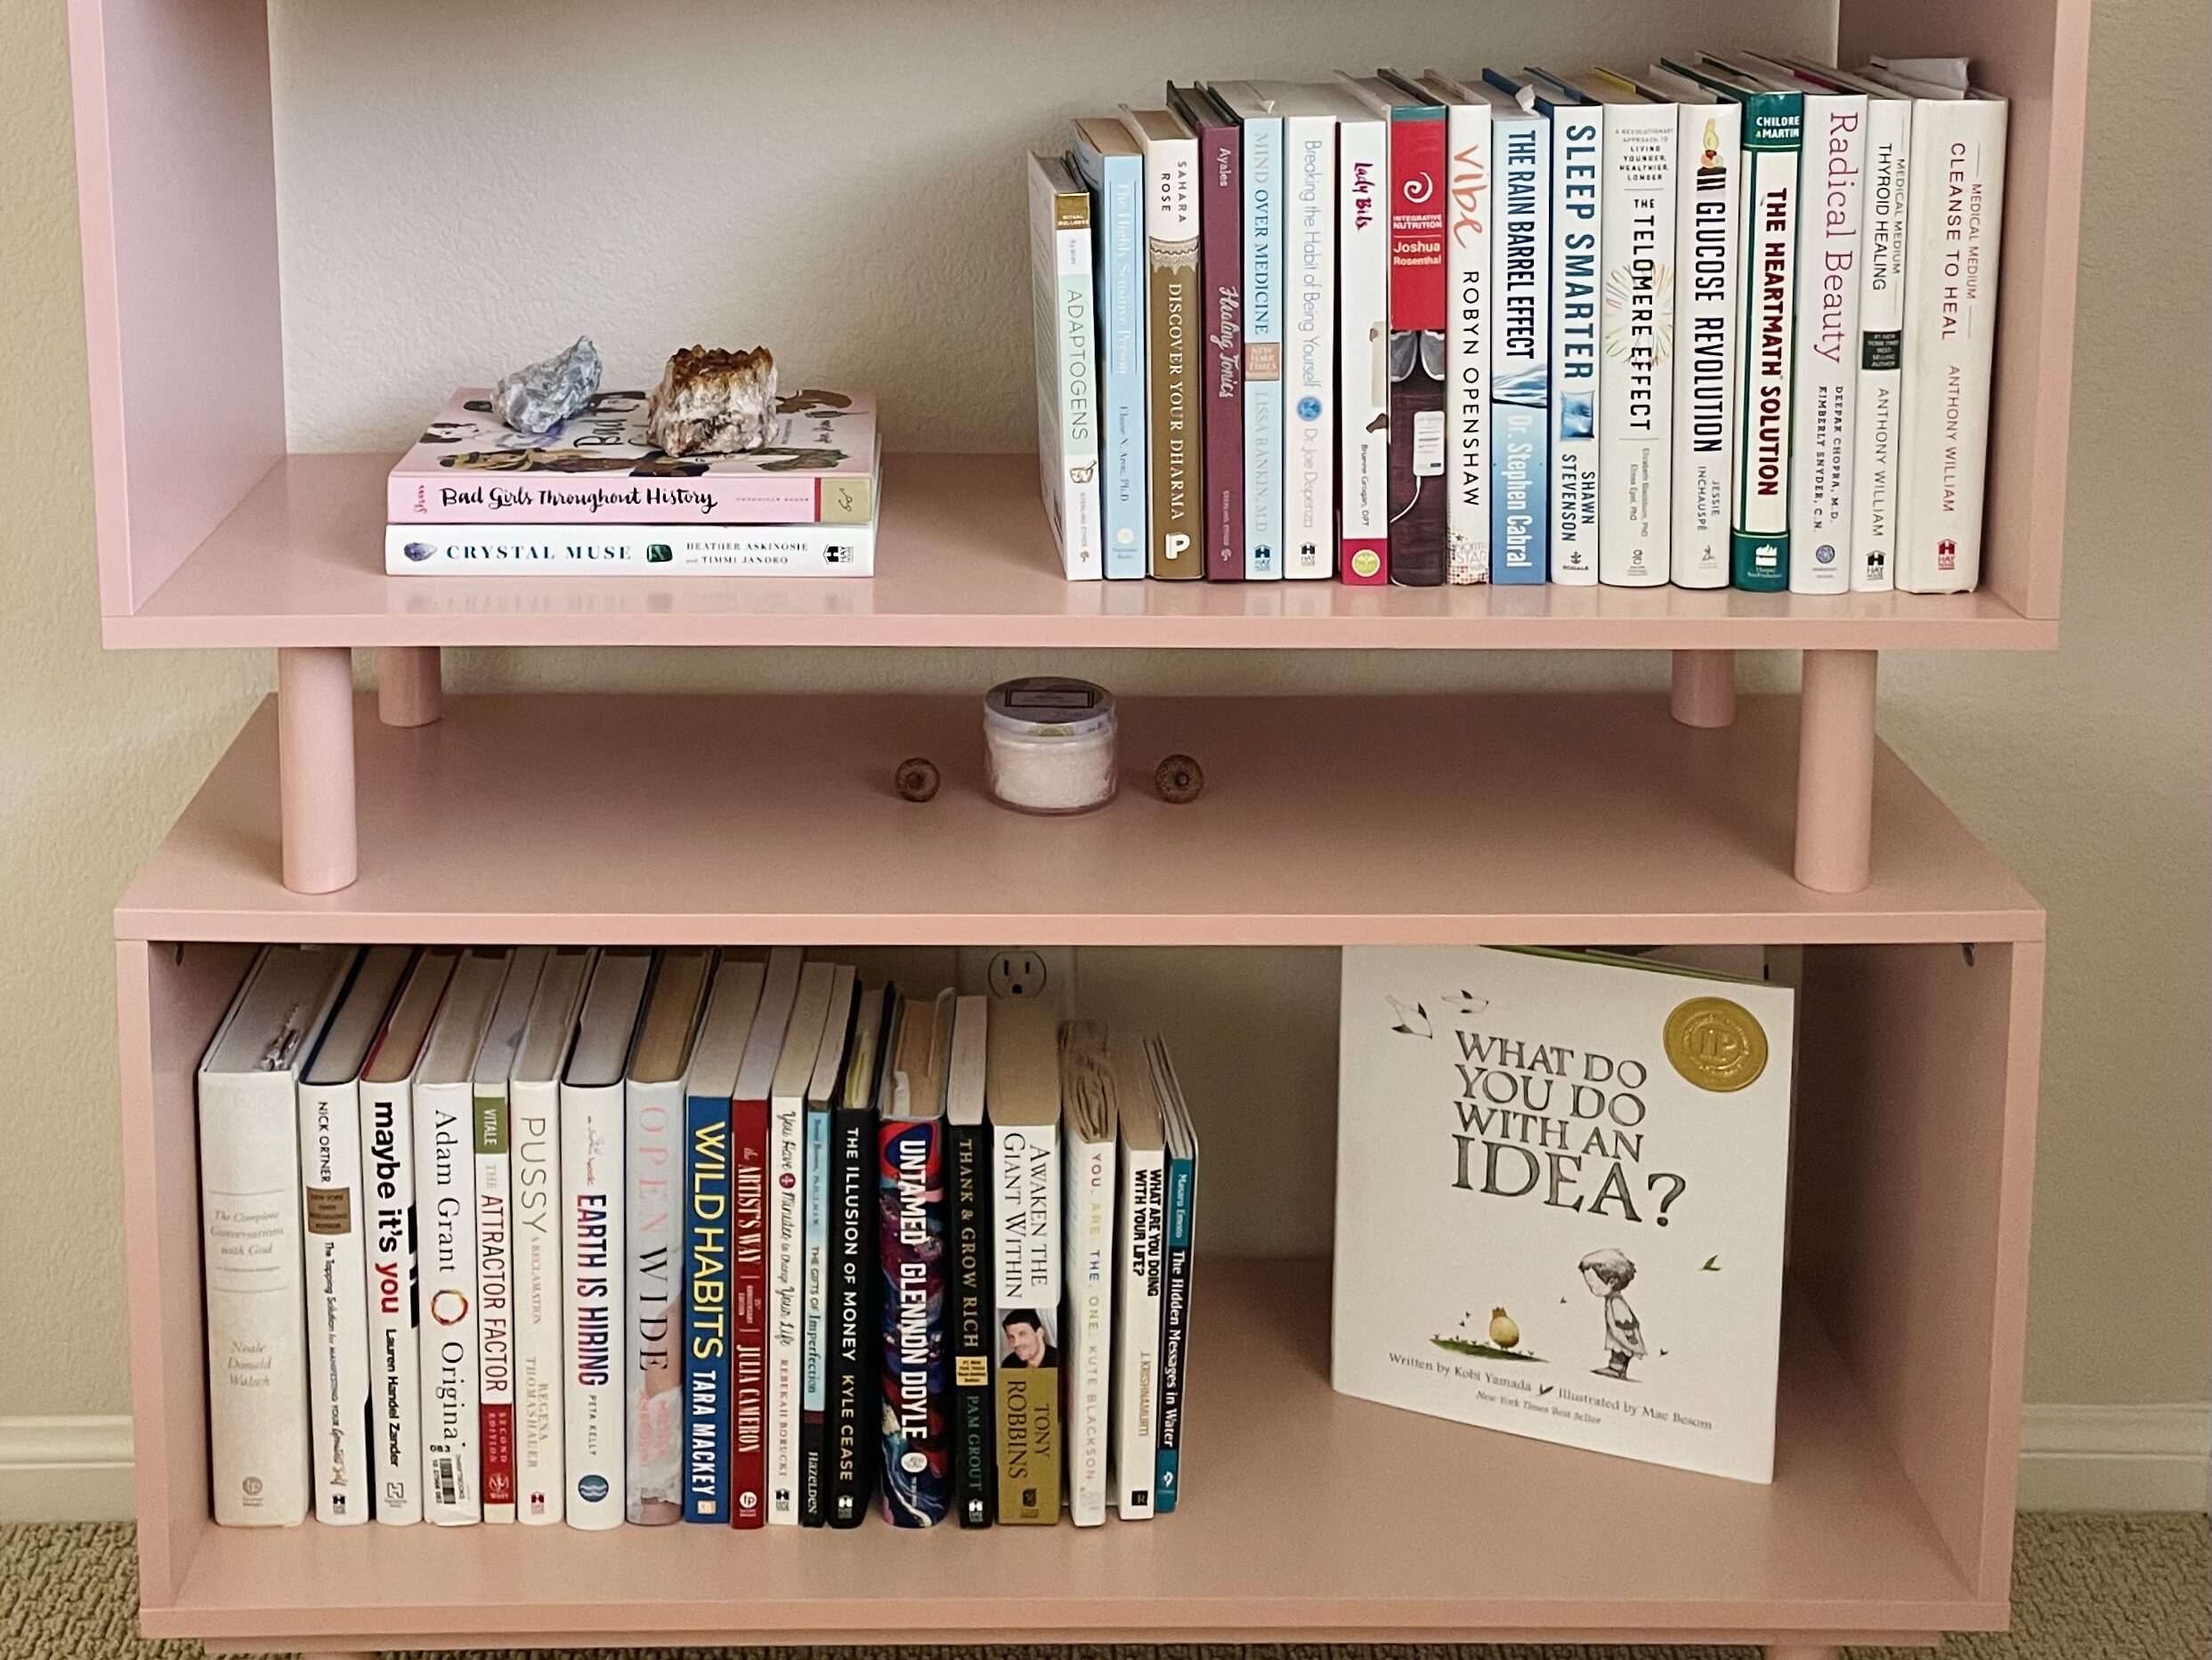 Organized books on a pink bookshelf.